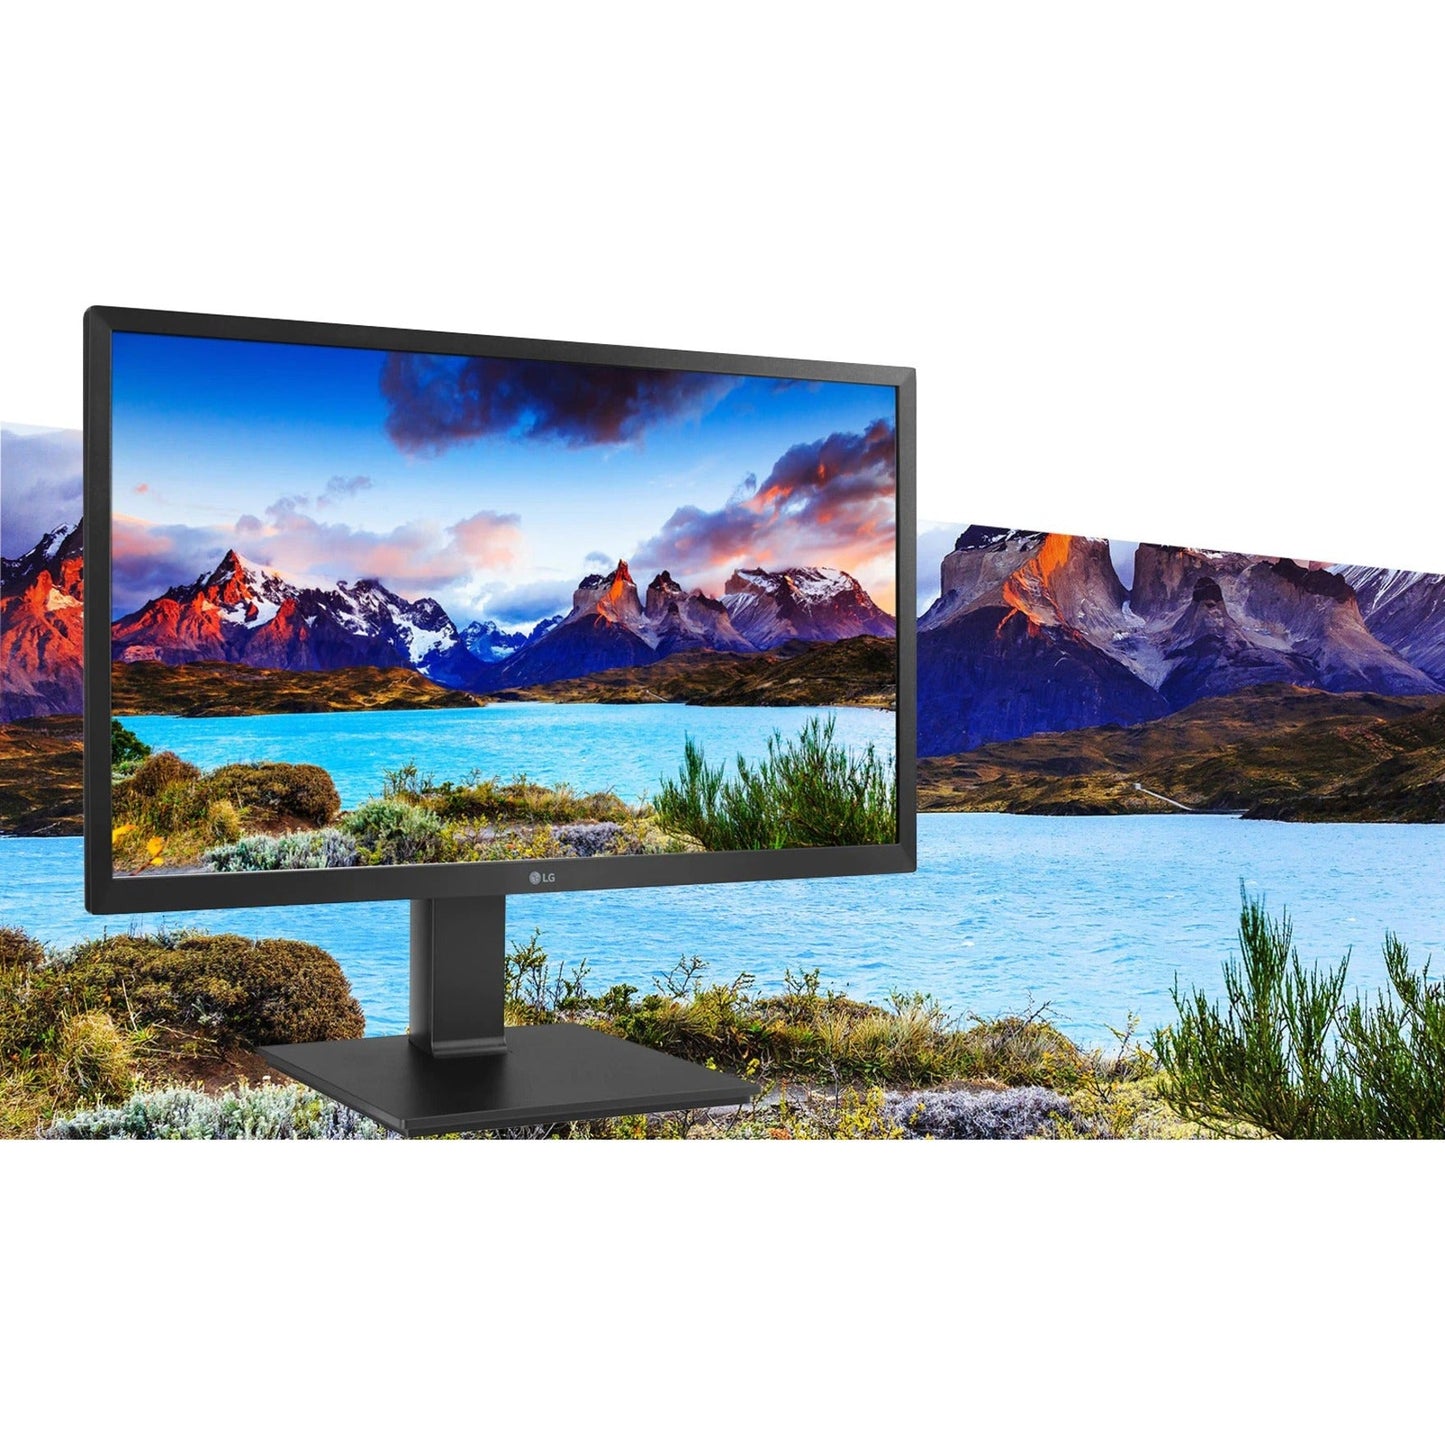 LG 27BP450Y-I 27" Full HD LCD Monitor - 16:9 - Black - TAA Compliant